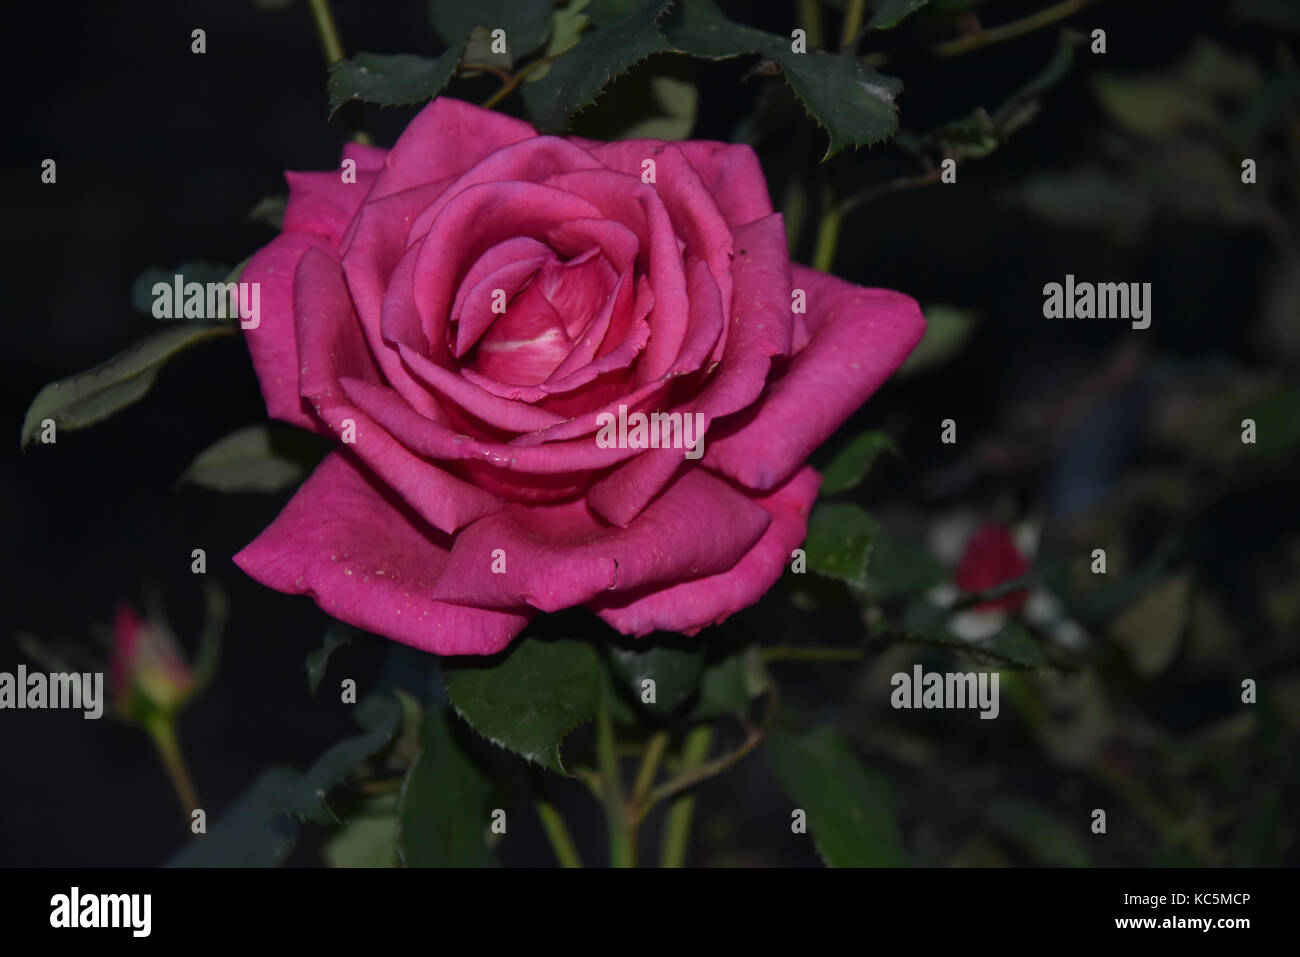 pink rose, black background Stock Photo